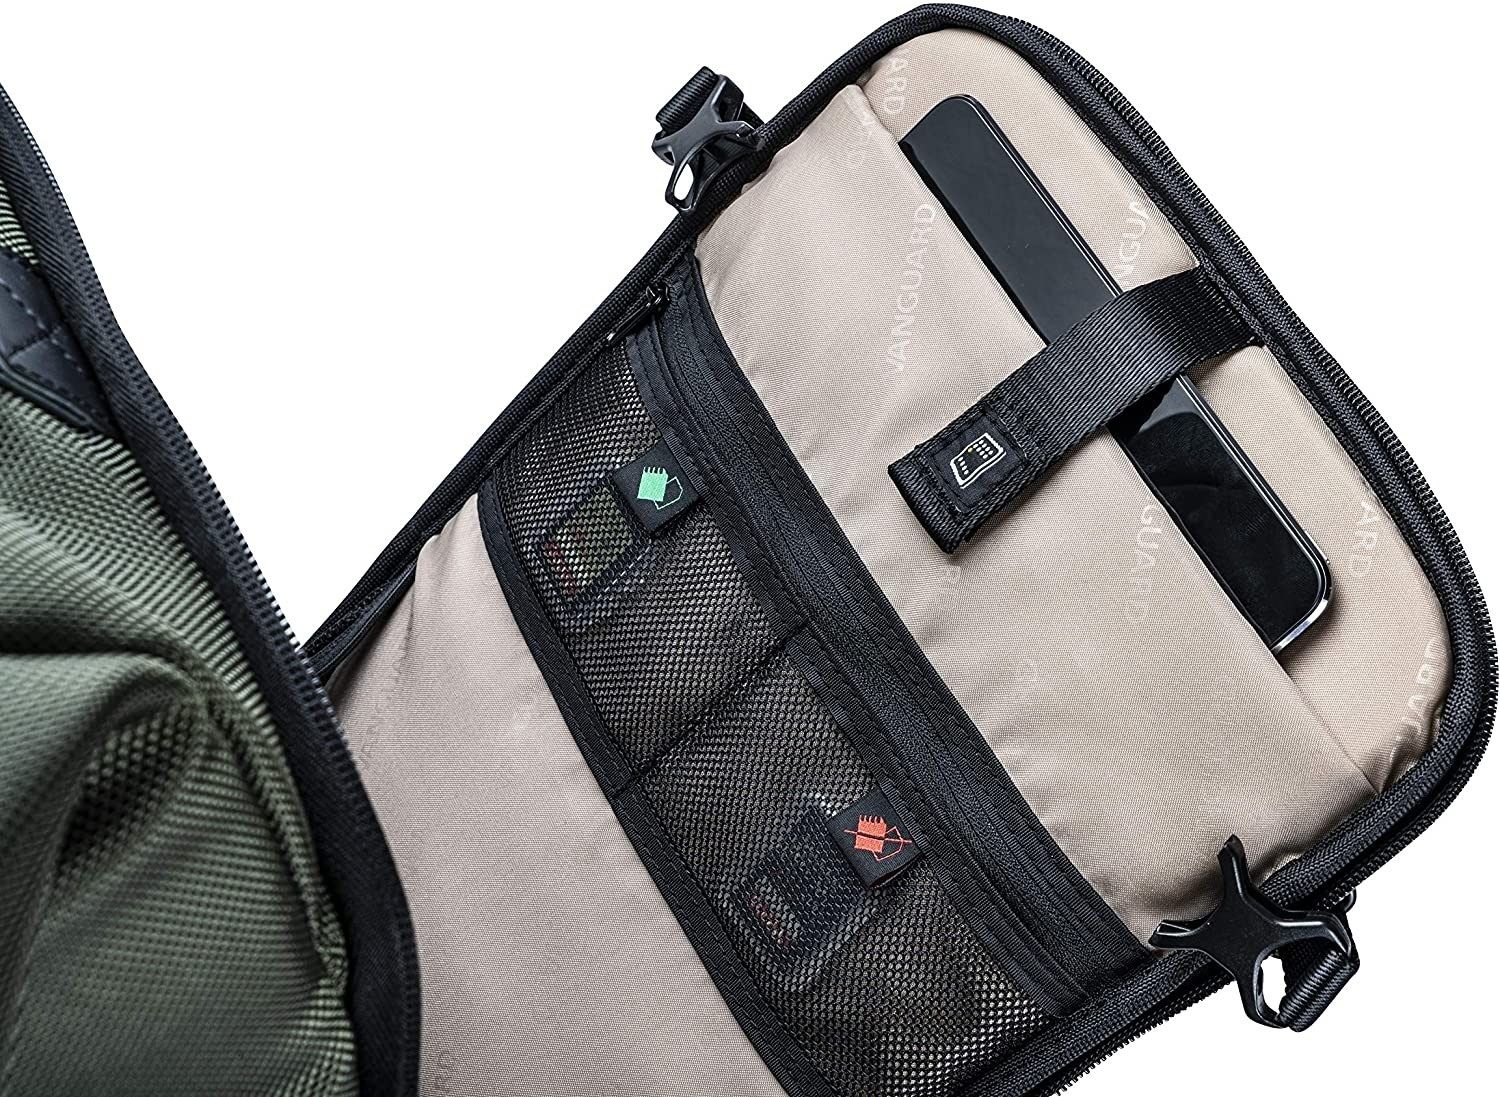 Vanguard VEO SELECT 43RB Roll-Top Backpack - Green